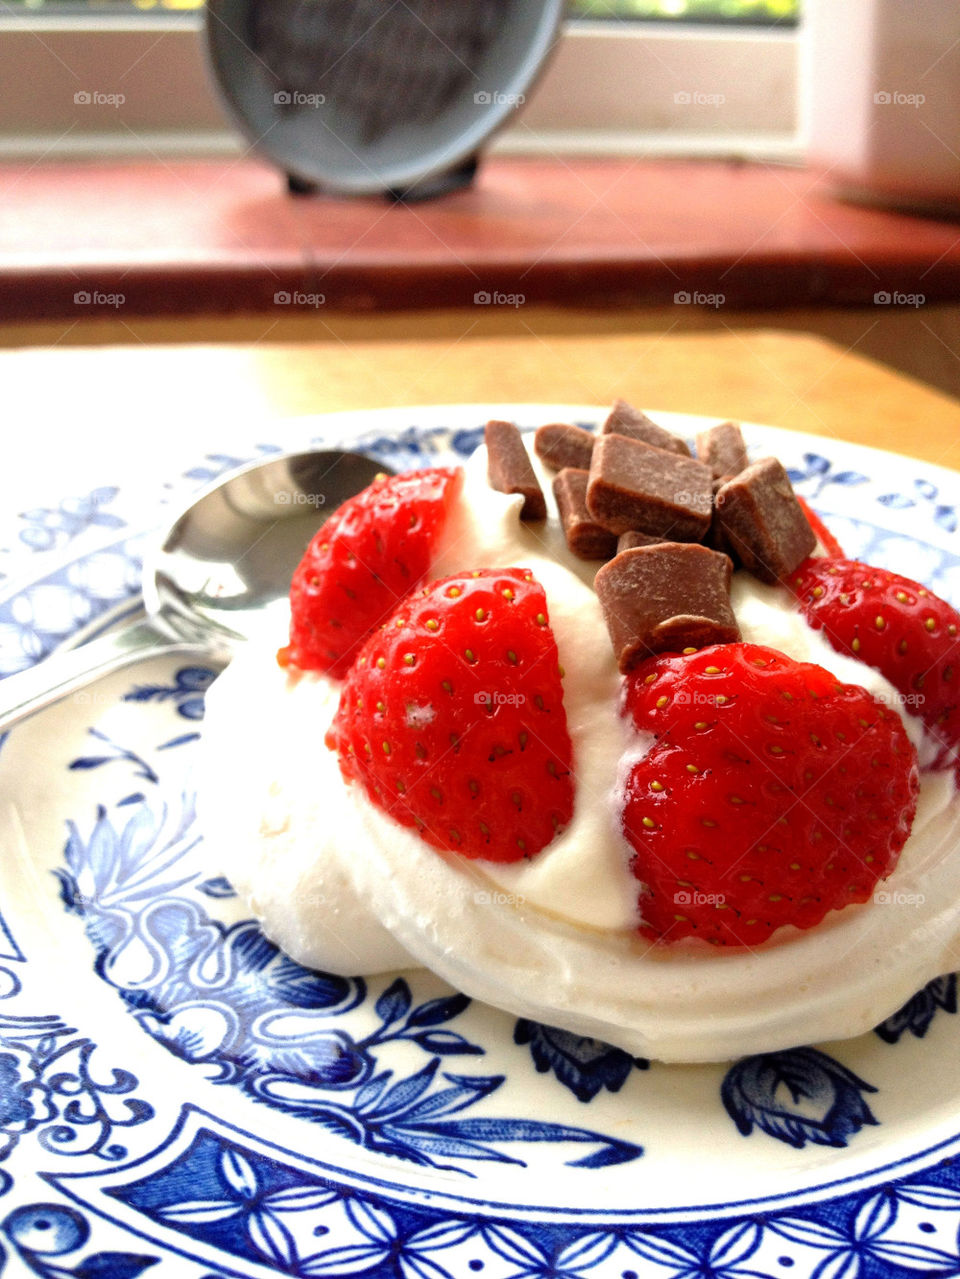 food cream strawberry chocolate by ambertaba